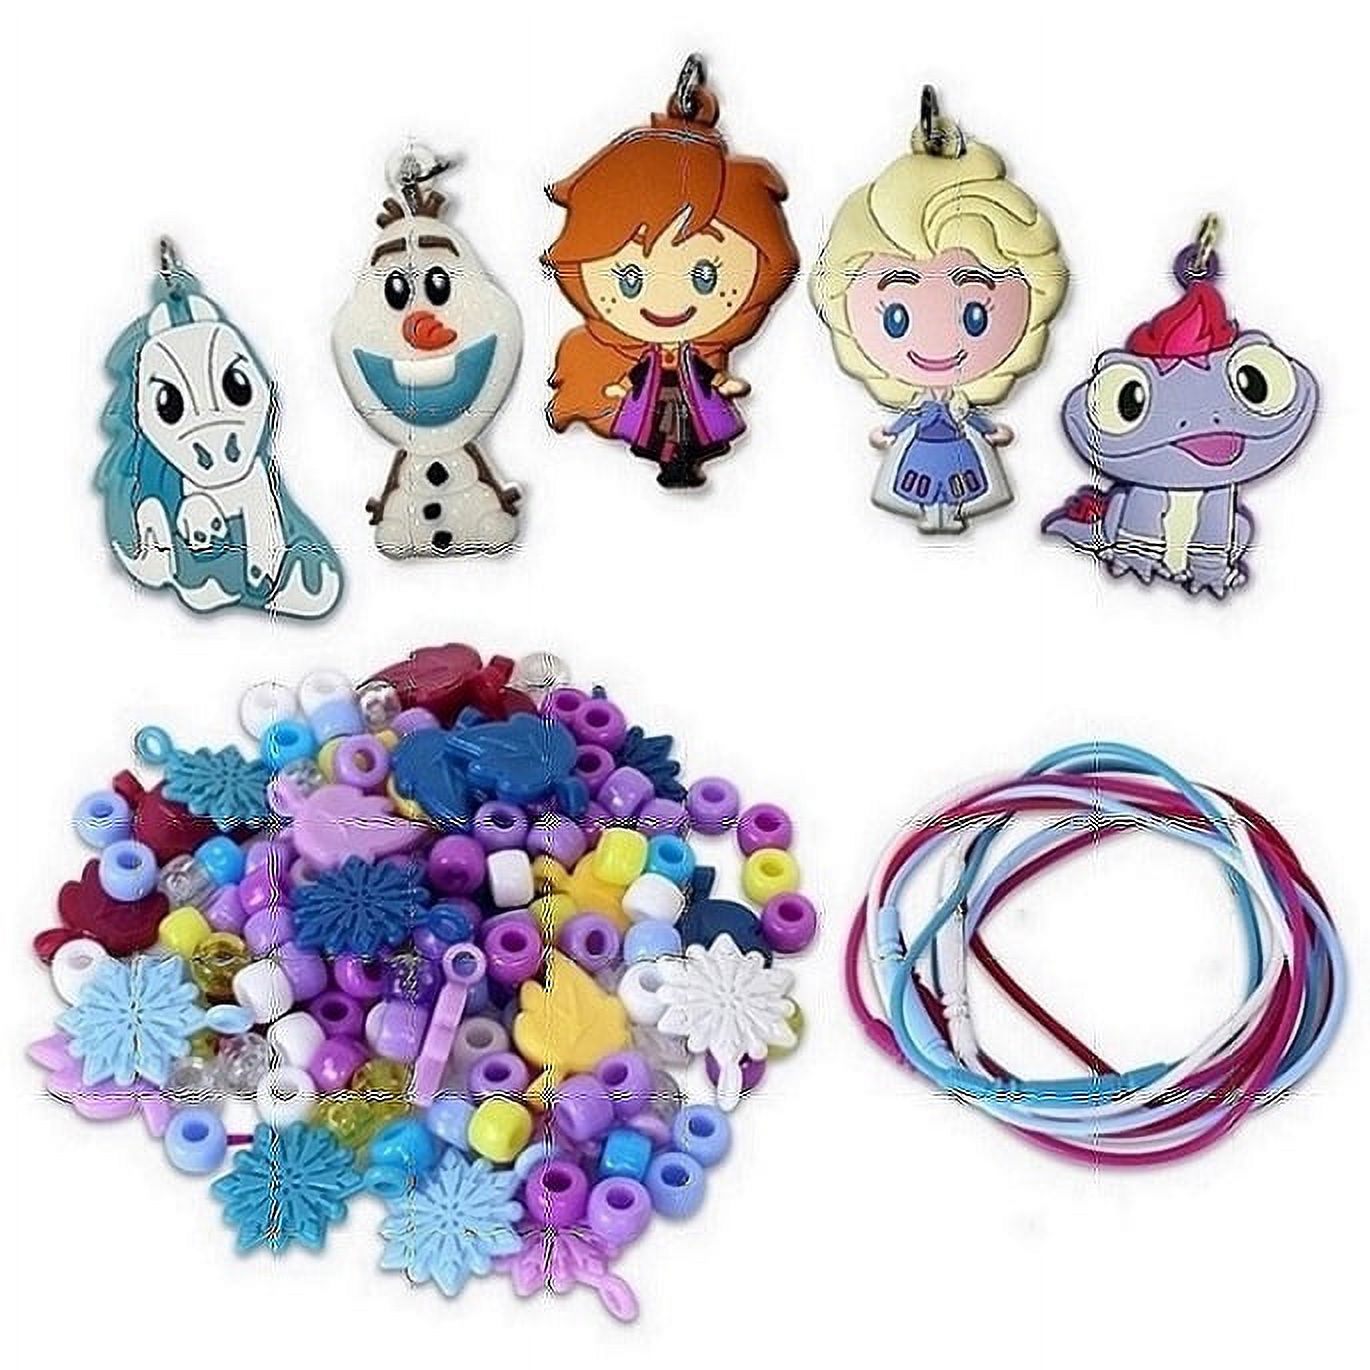 Disney Frozen 2 Plastic Jewelry Activity Set - multi character, multicolored - image 2 of 5